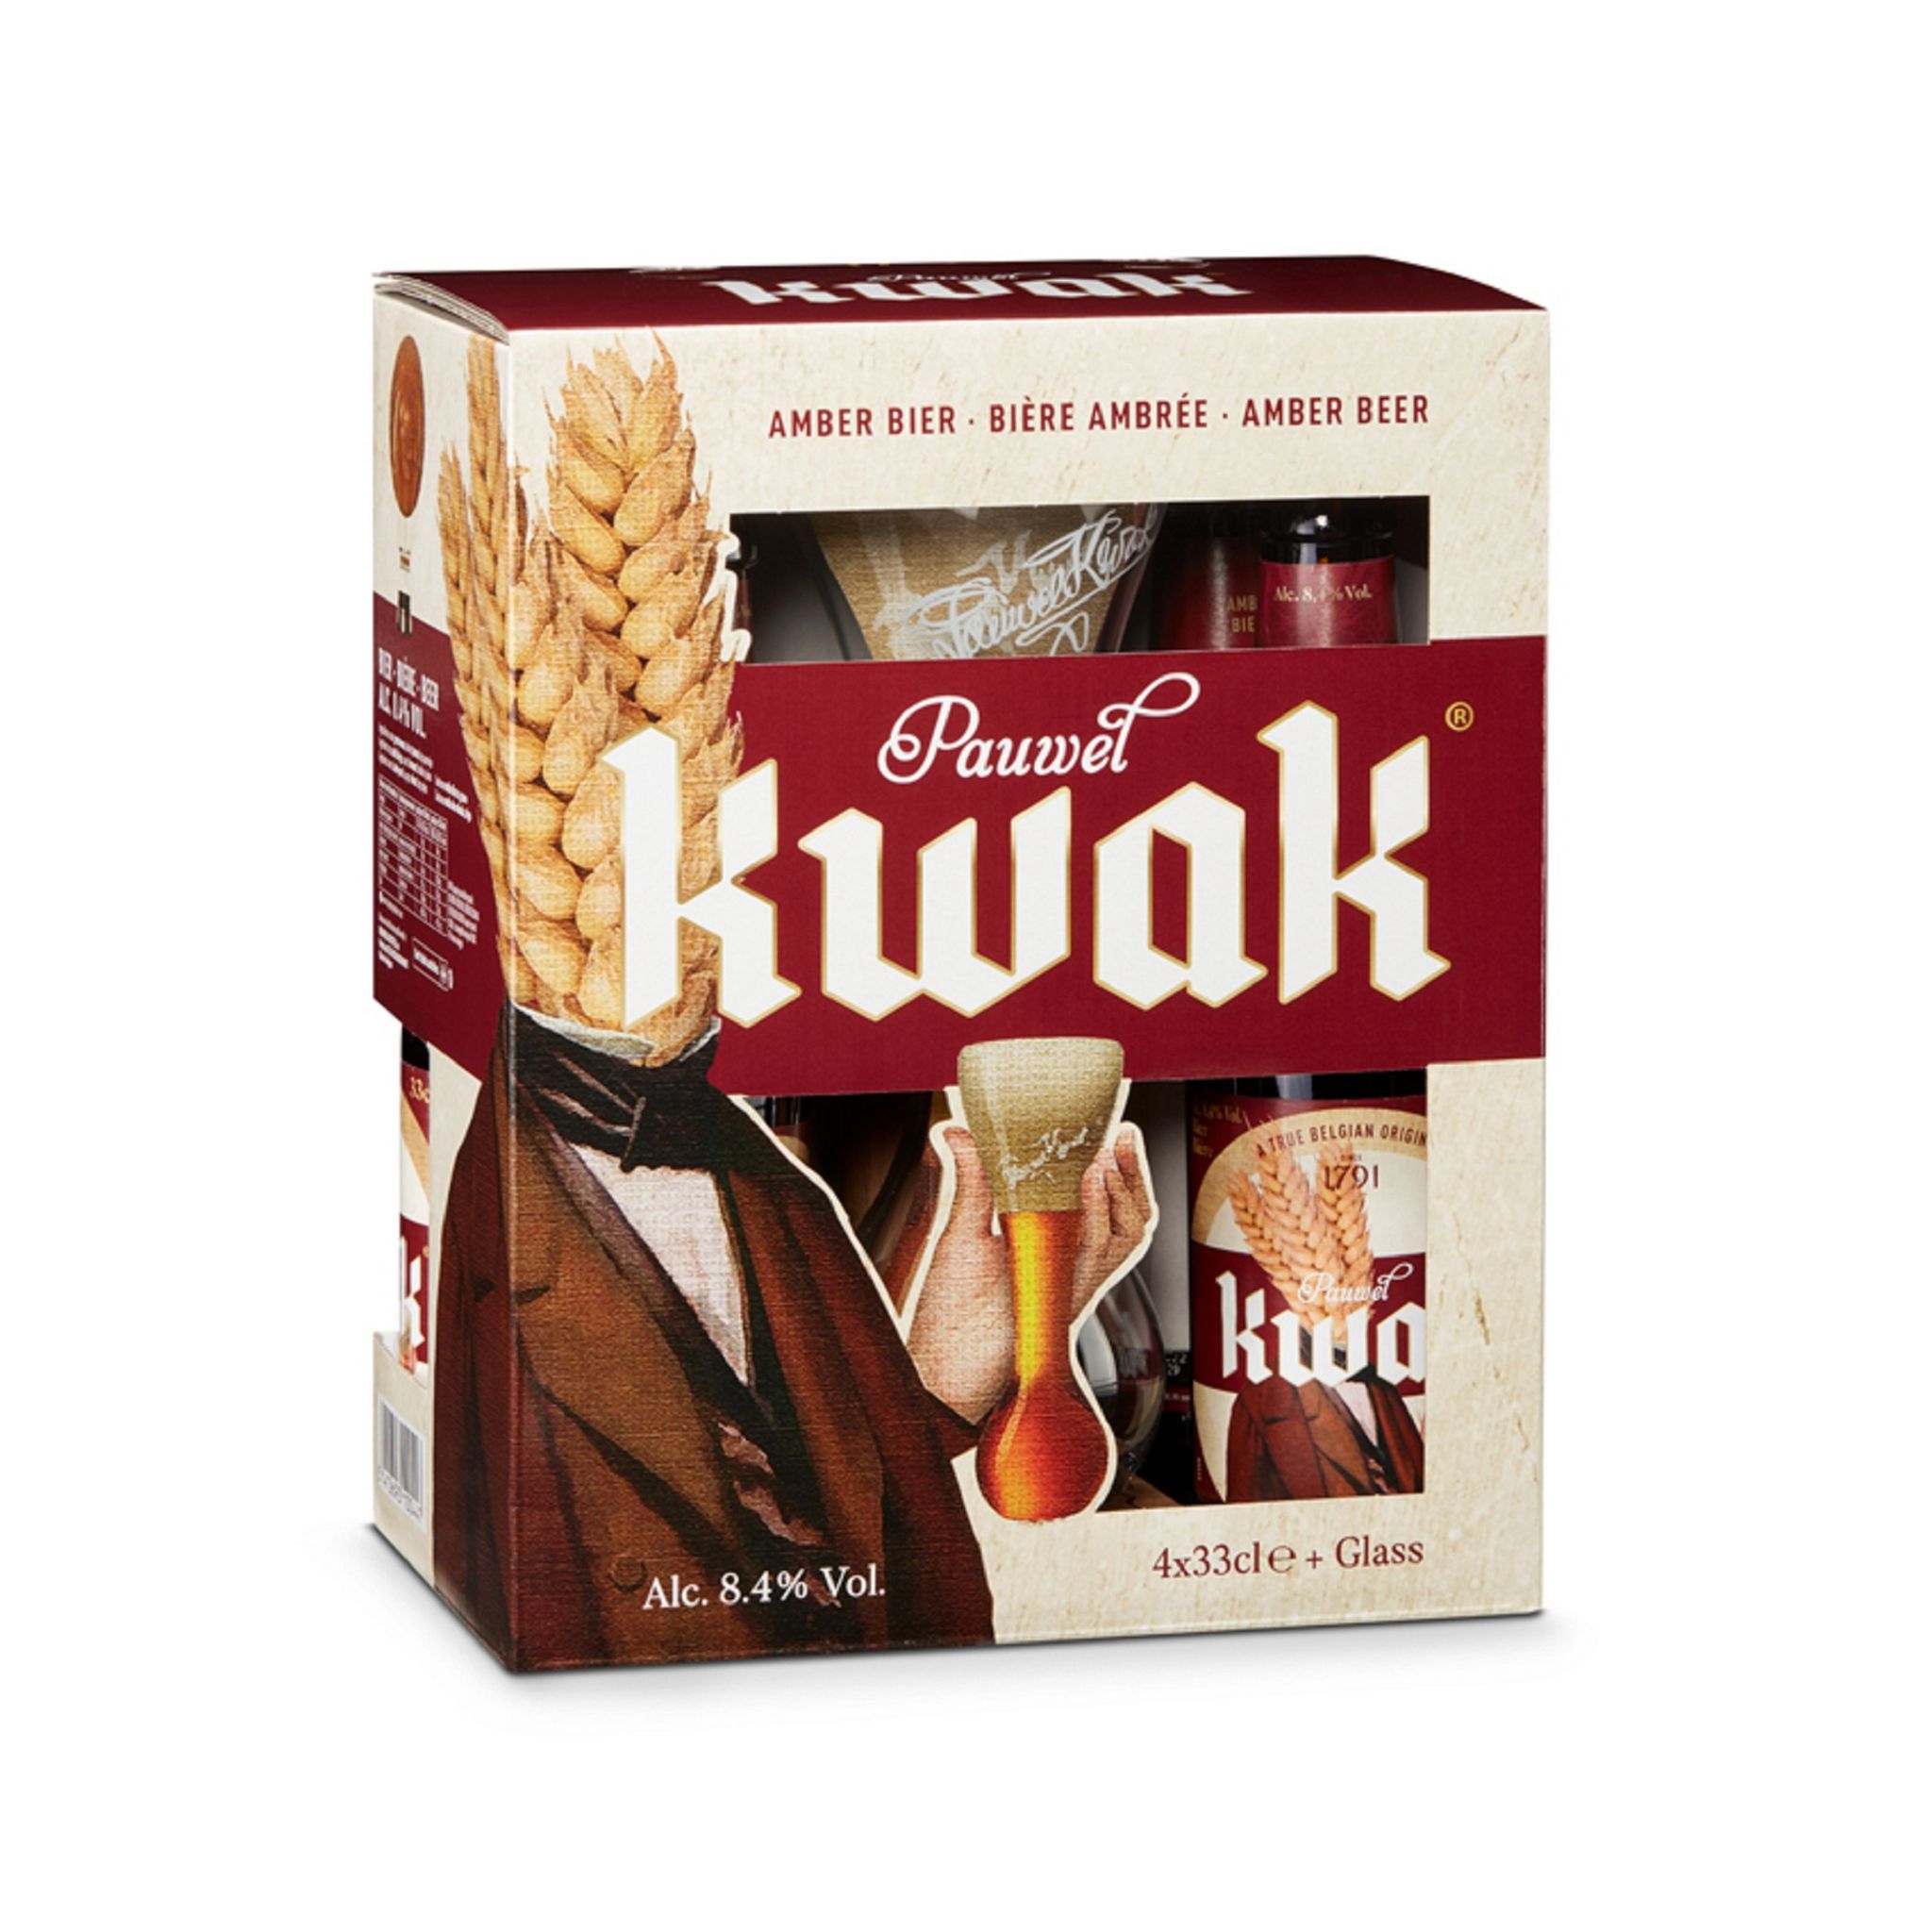 Пивоварня мичуринский. Бельгийское пиво Kwak. Пиво Kwak Gift Set. Пиво Квак Бельгия. Pauwel Kwak.